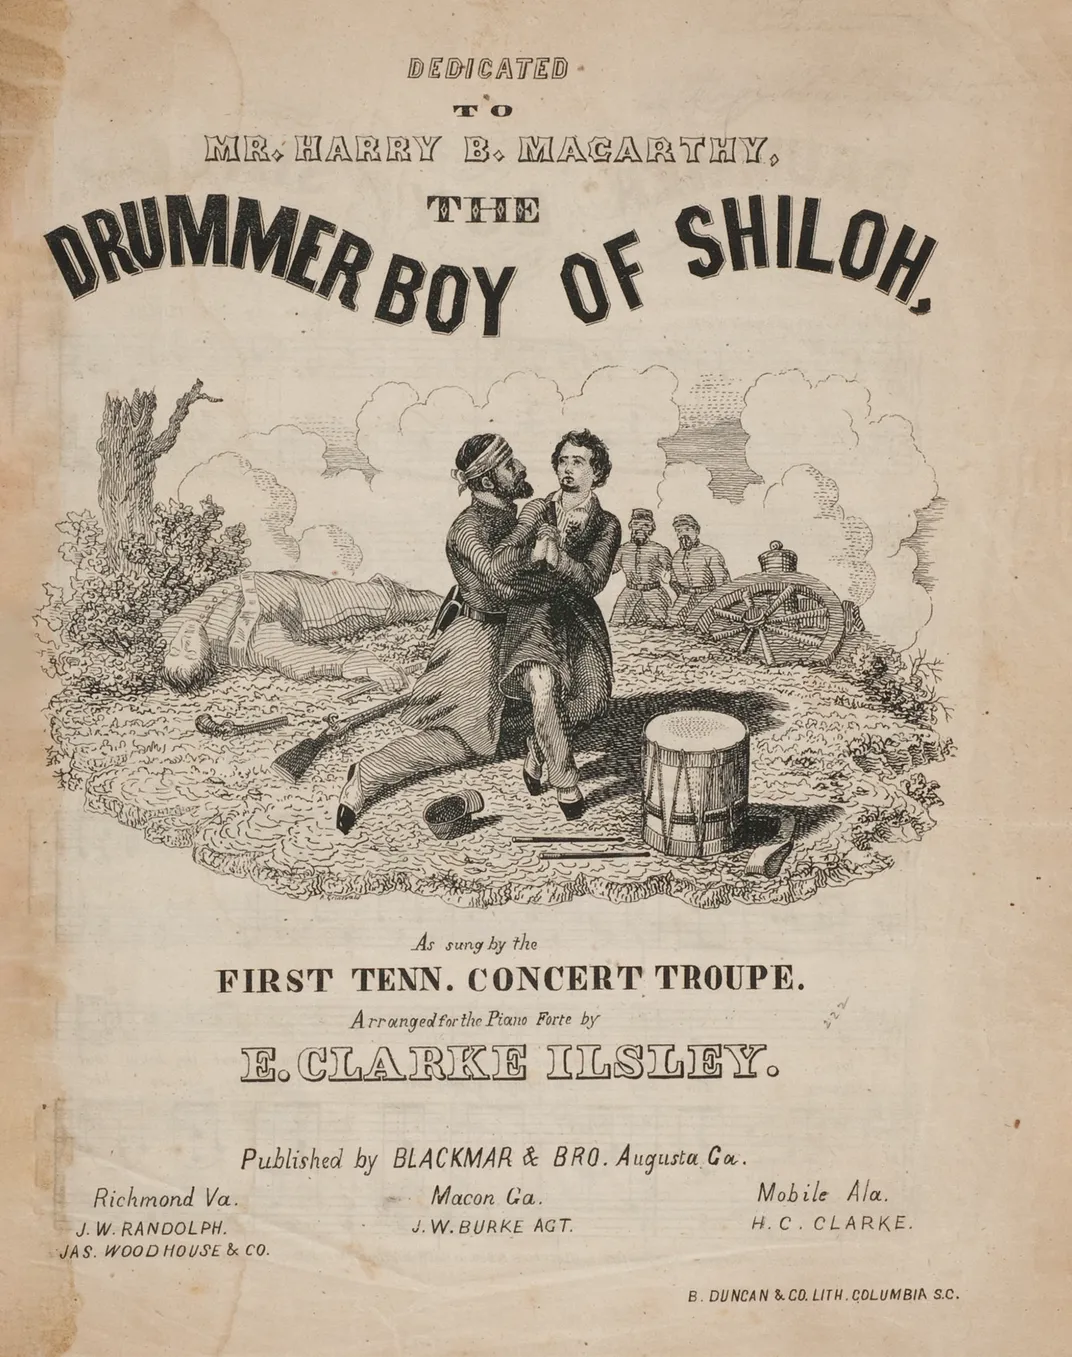 Will S. Hays, “The Drummer Boy of Shiloh,” Augusta, Ga: Blackmar & Bro., c.1863